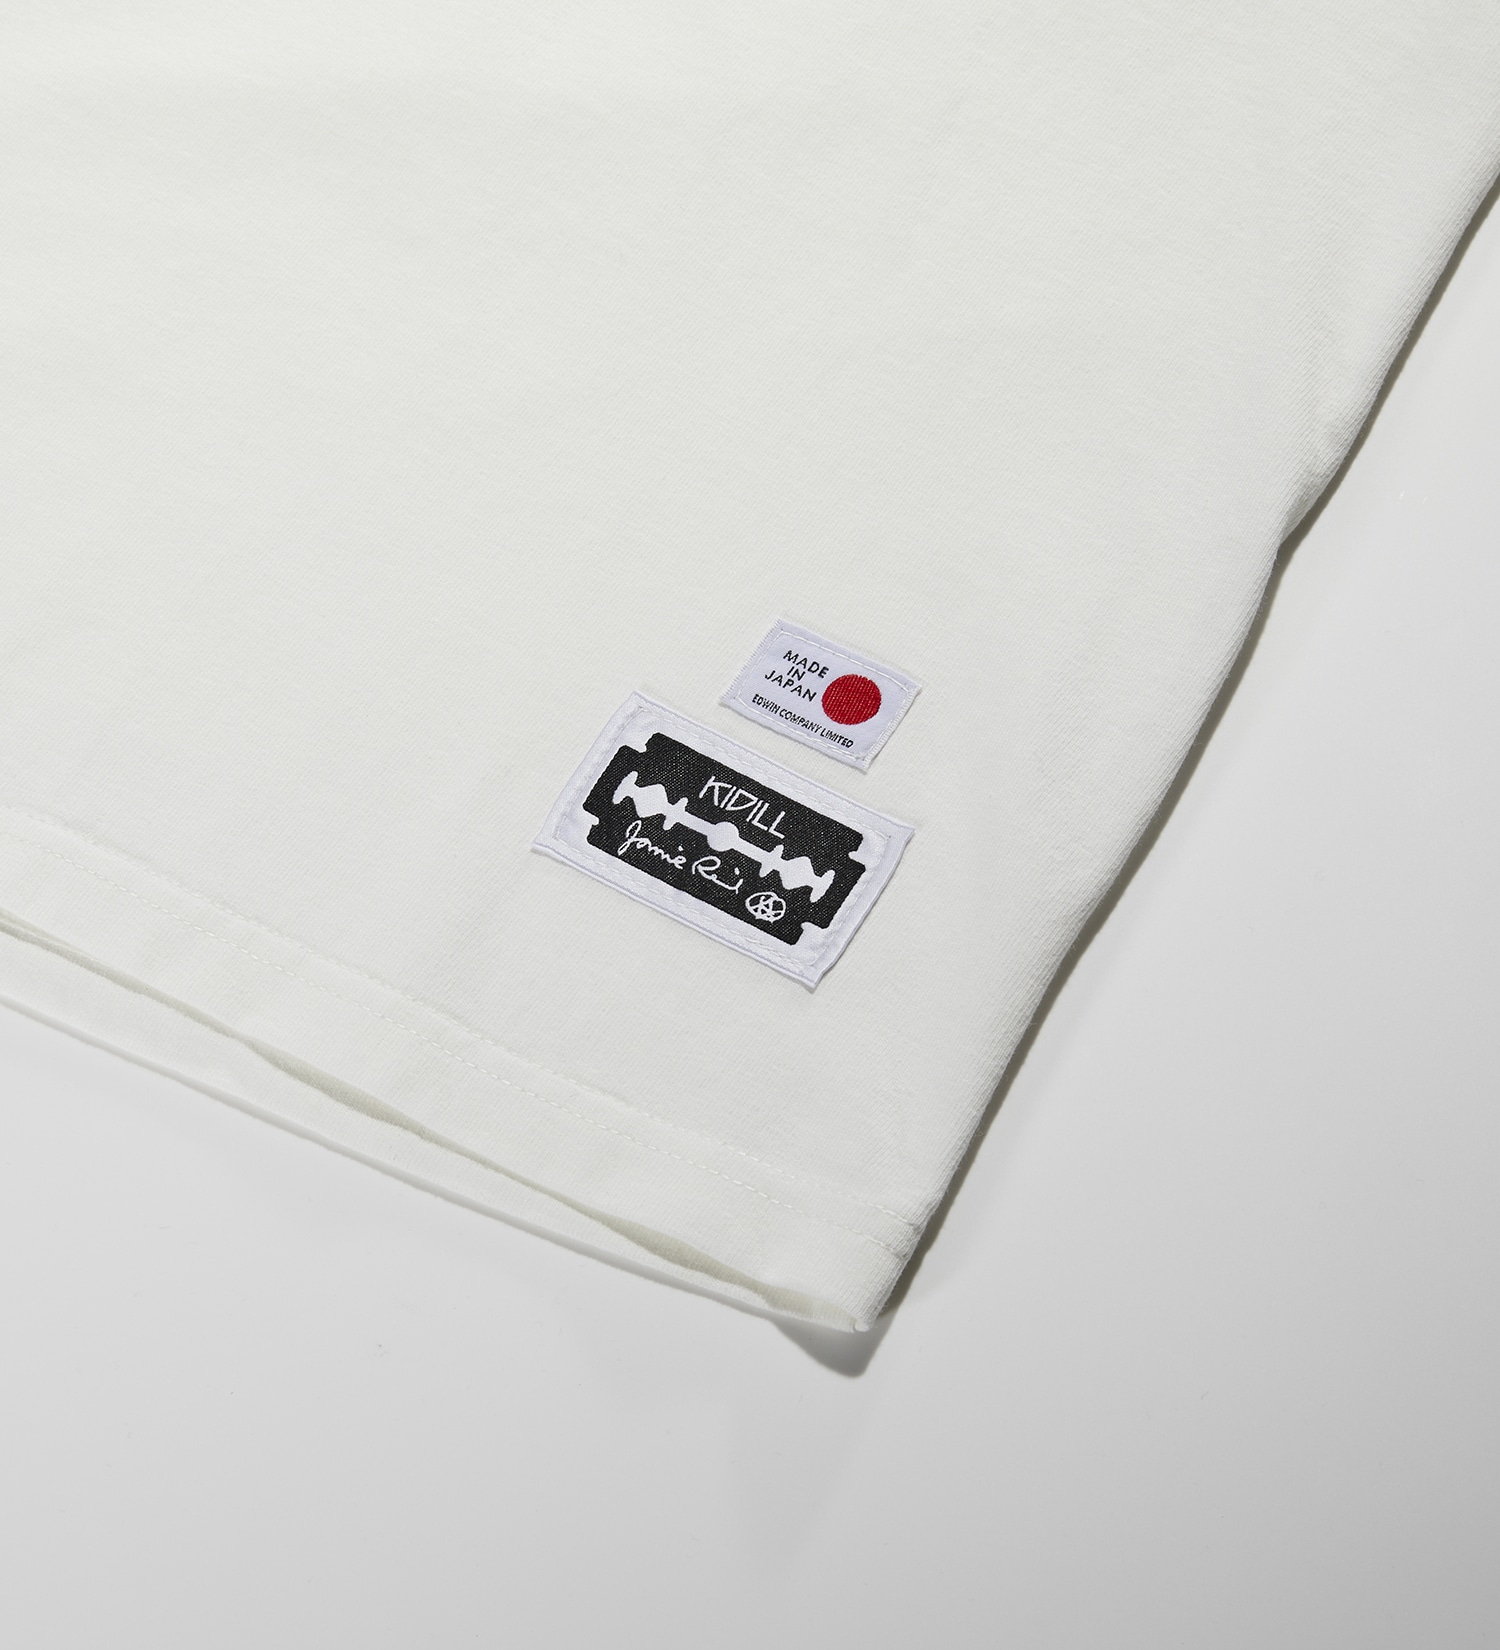 EDWIN(エドウイン)の【SALE】【EDWIN x KIDILL x Jamie Reid】 Magic Marker Print T Shirts|トップス/Tシャツ/カットソー/メンズ|ホワイト